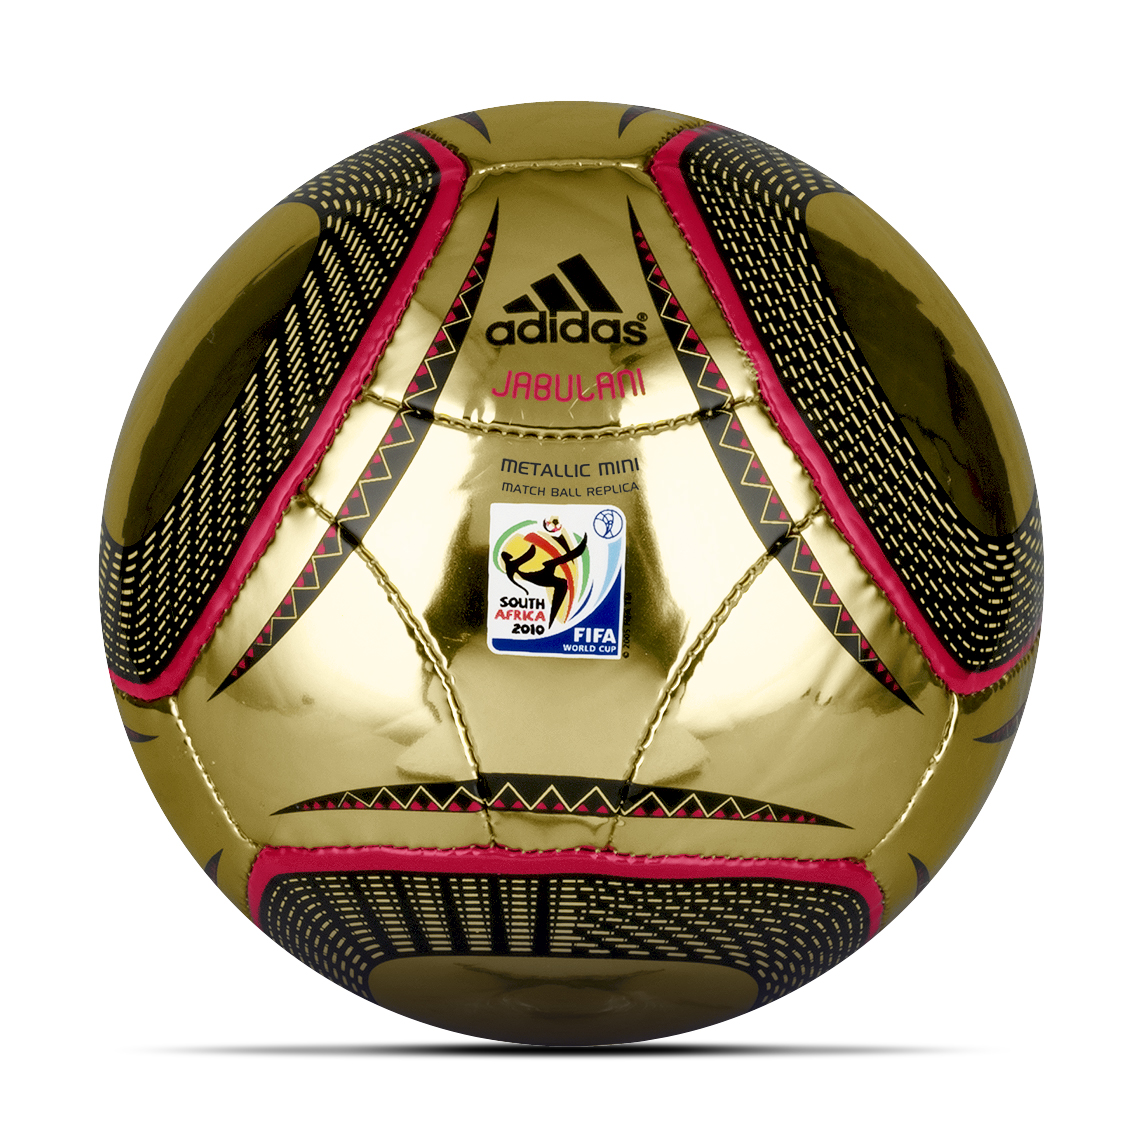 adidas World Cup 2010 Metallic Miniball Size 1